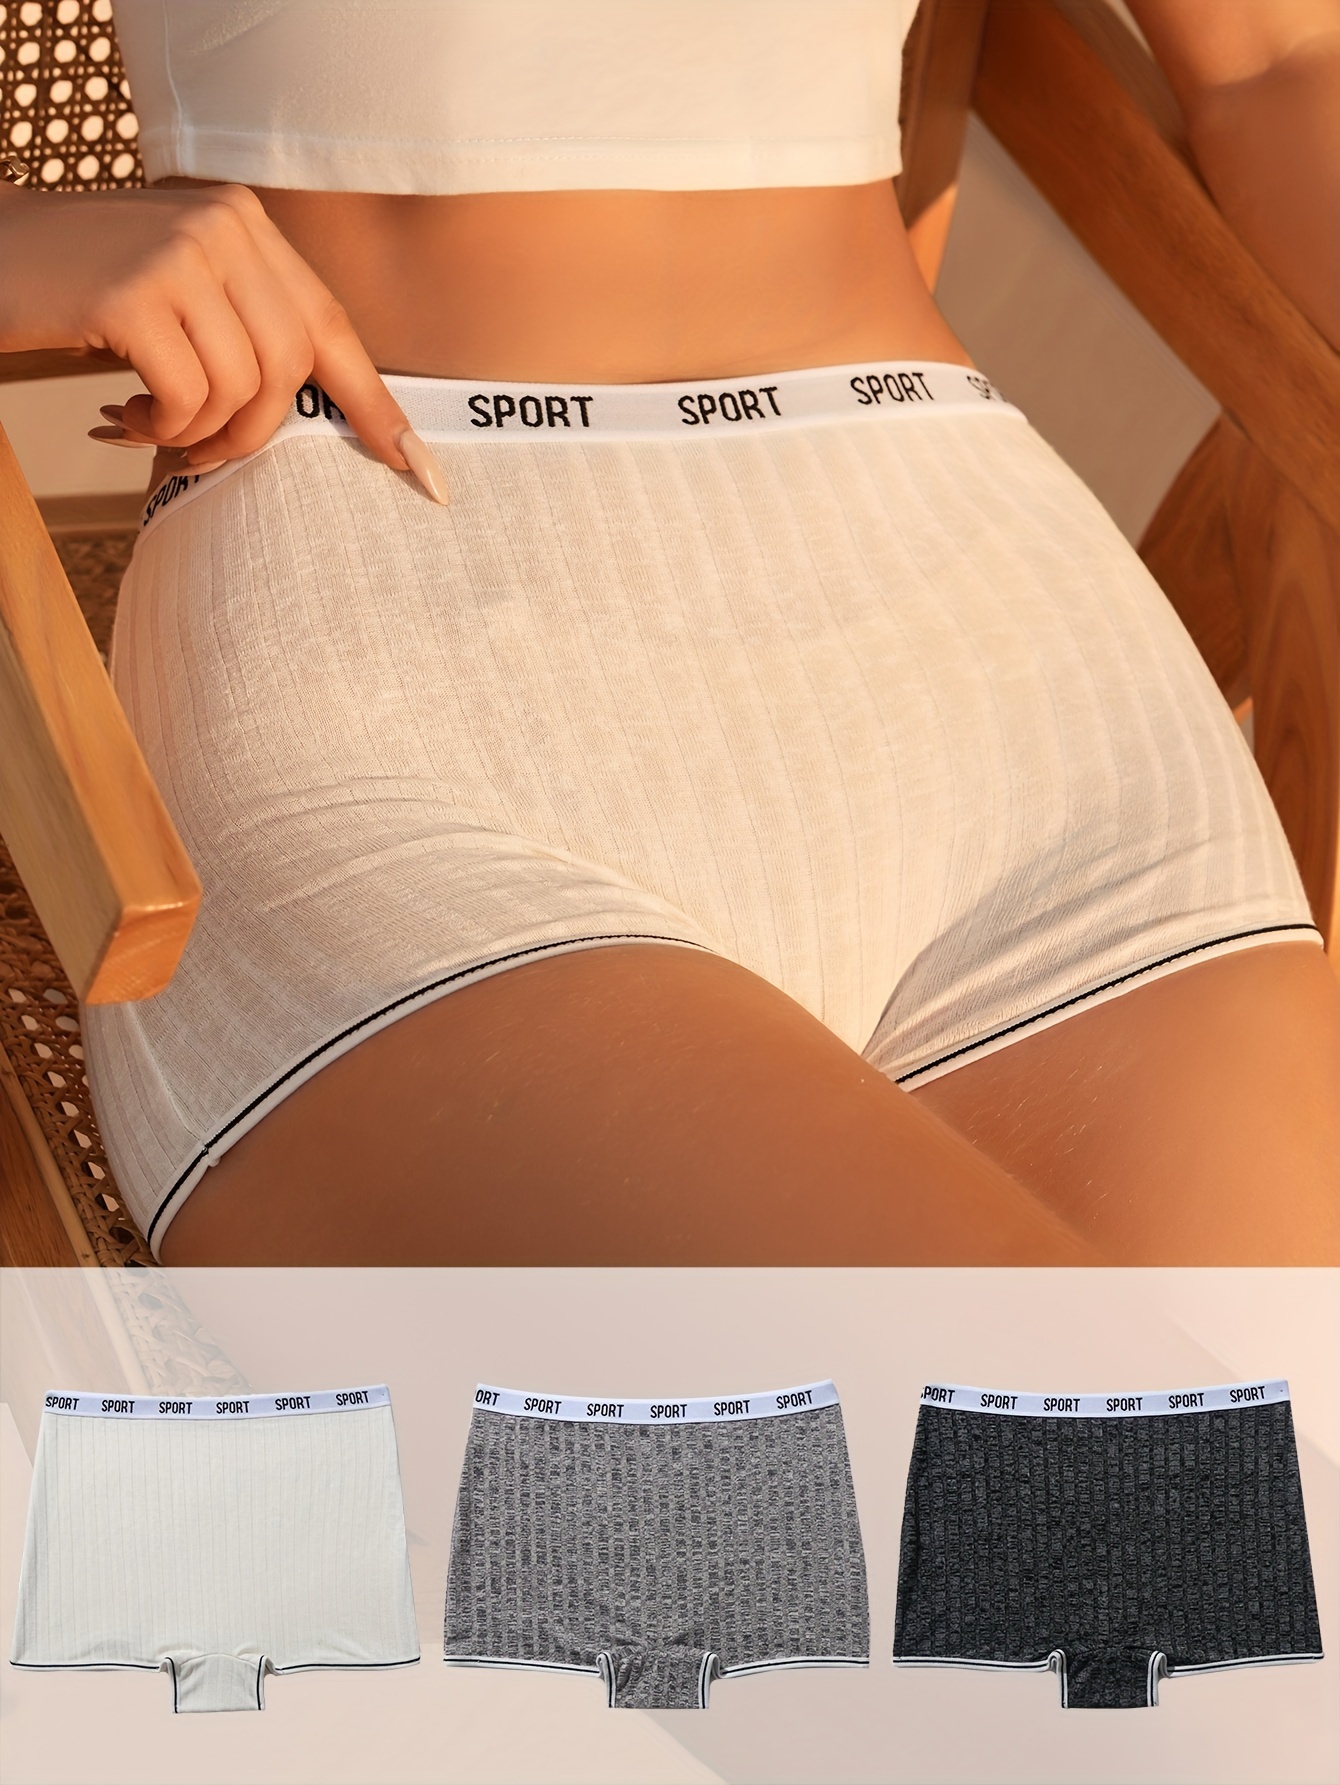 Cute Womens Foft Cotton Boxer Panty Shorts Sporter Style Lingerie